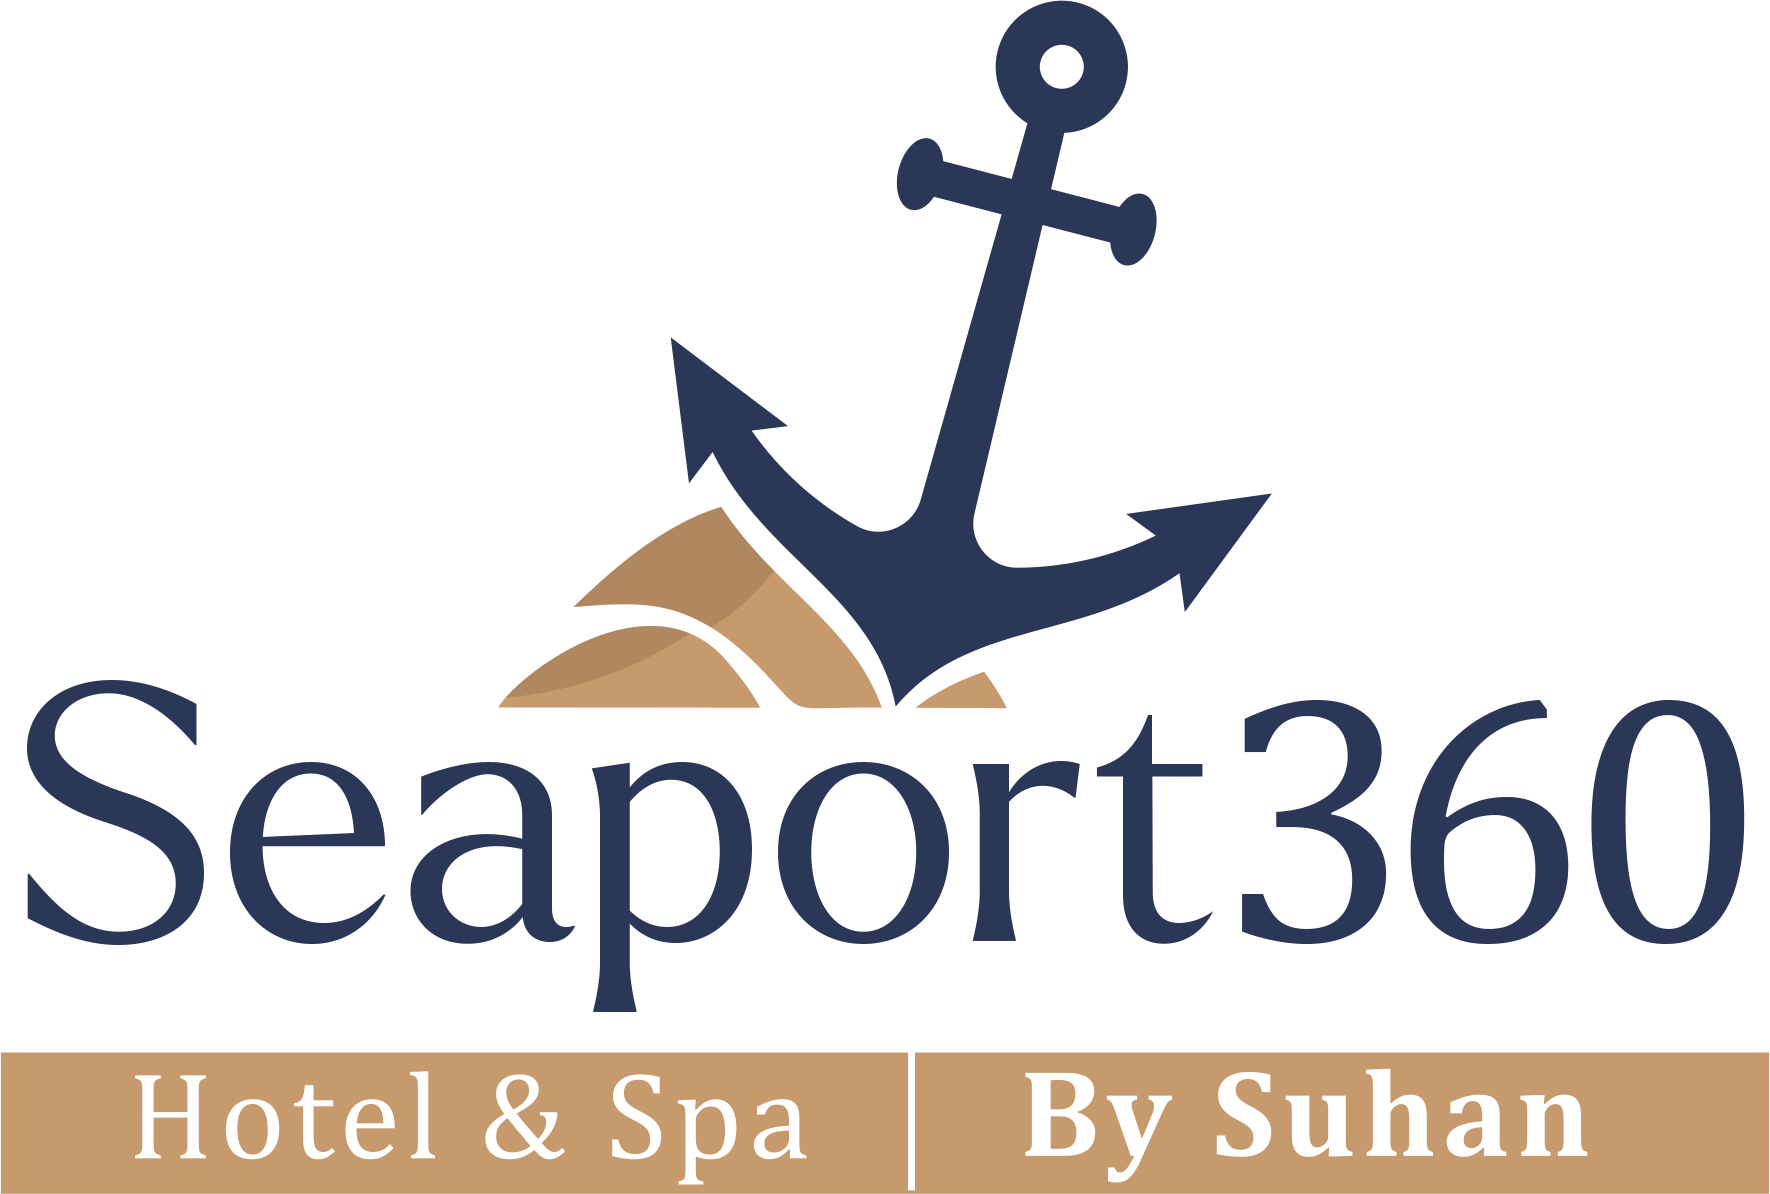 Suhan360 Hotel & Spa Logo Görseli